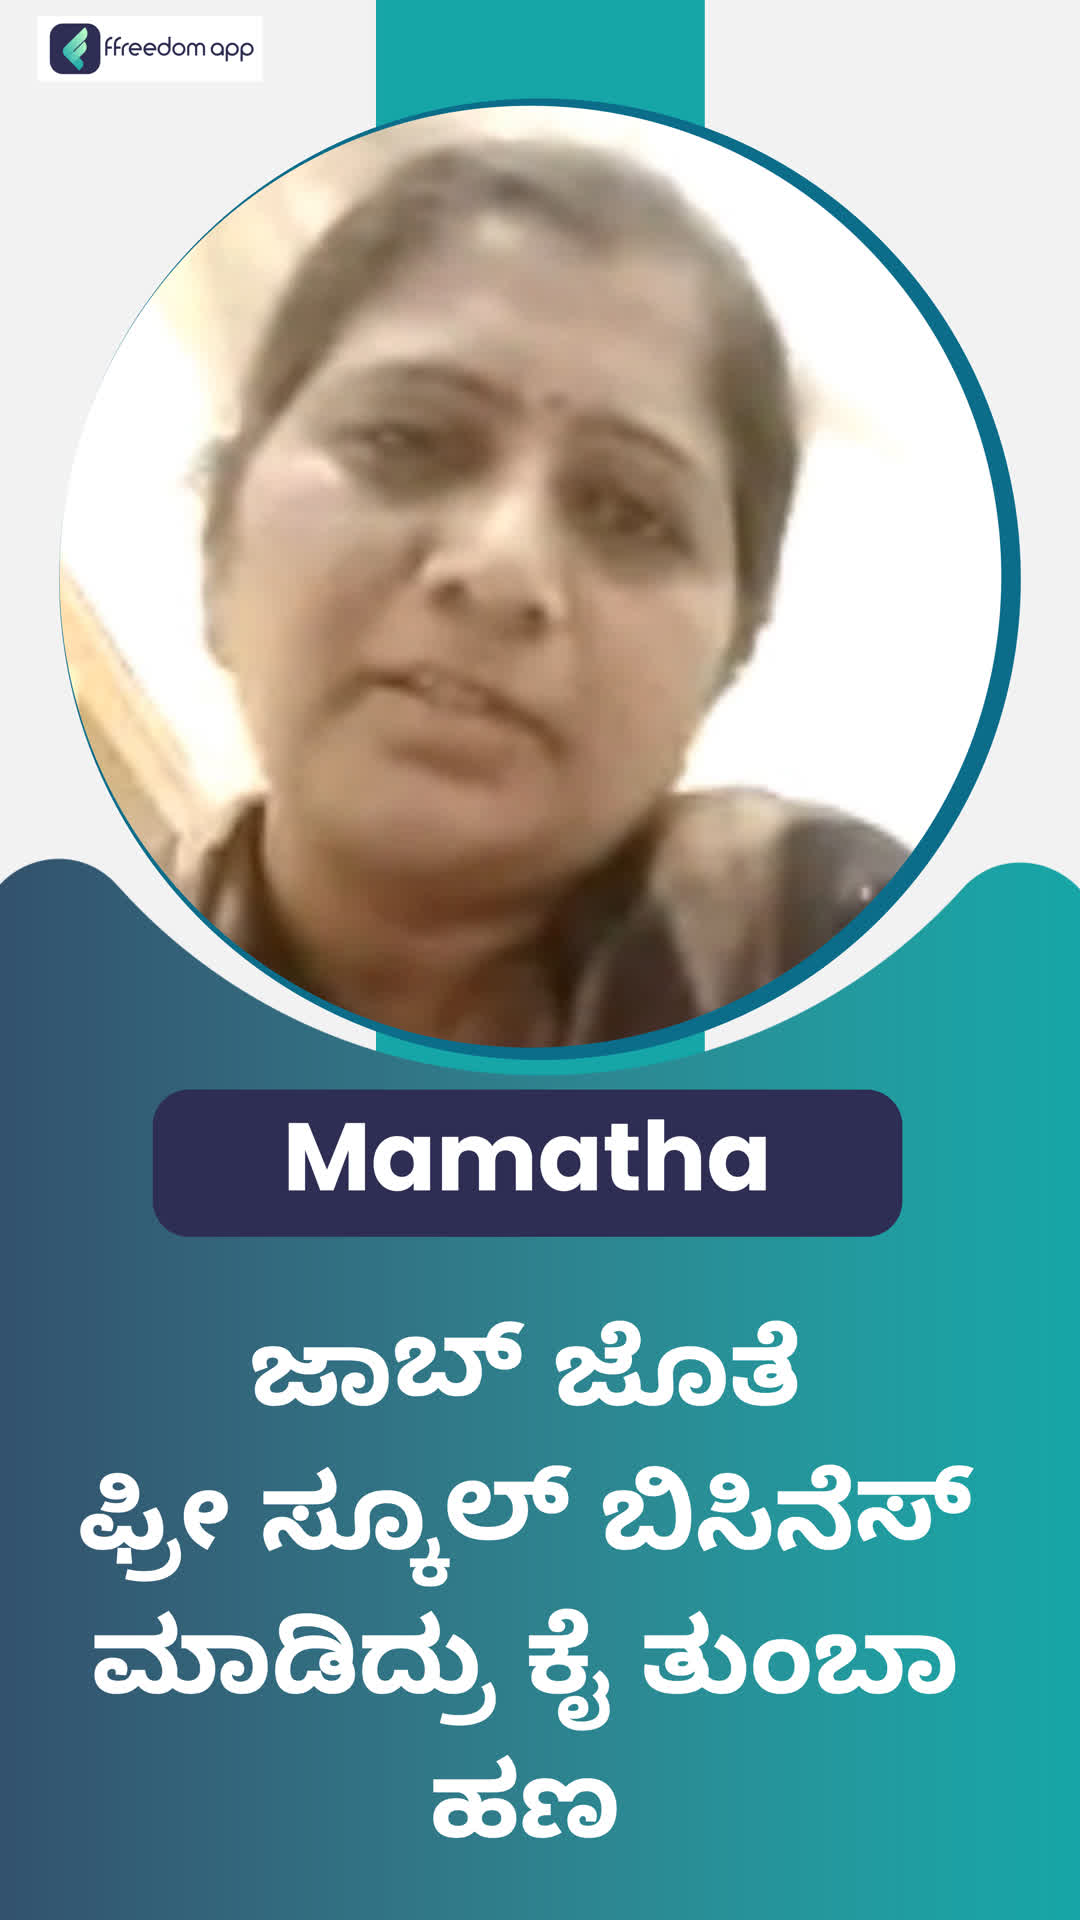 mamatha's Honest Review of ffreedom app - Chikmagalur ,Karnataka